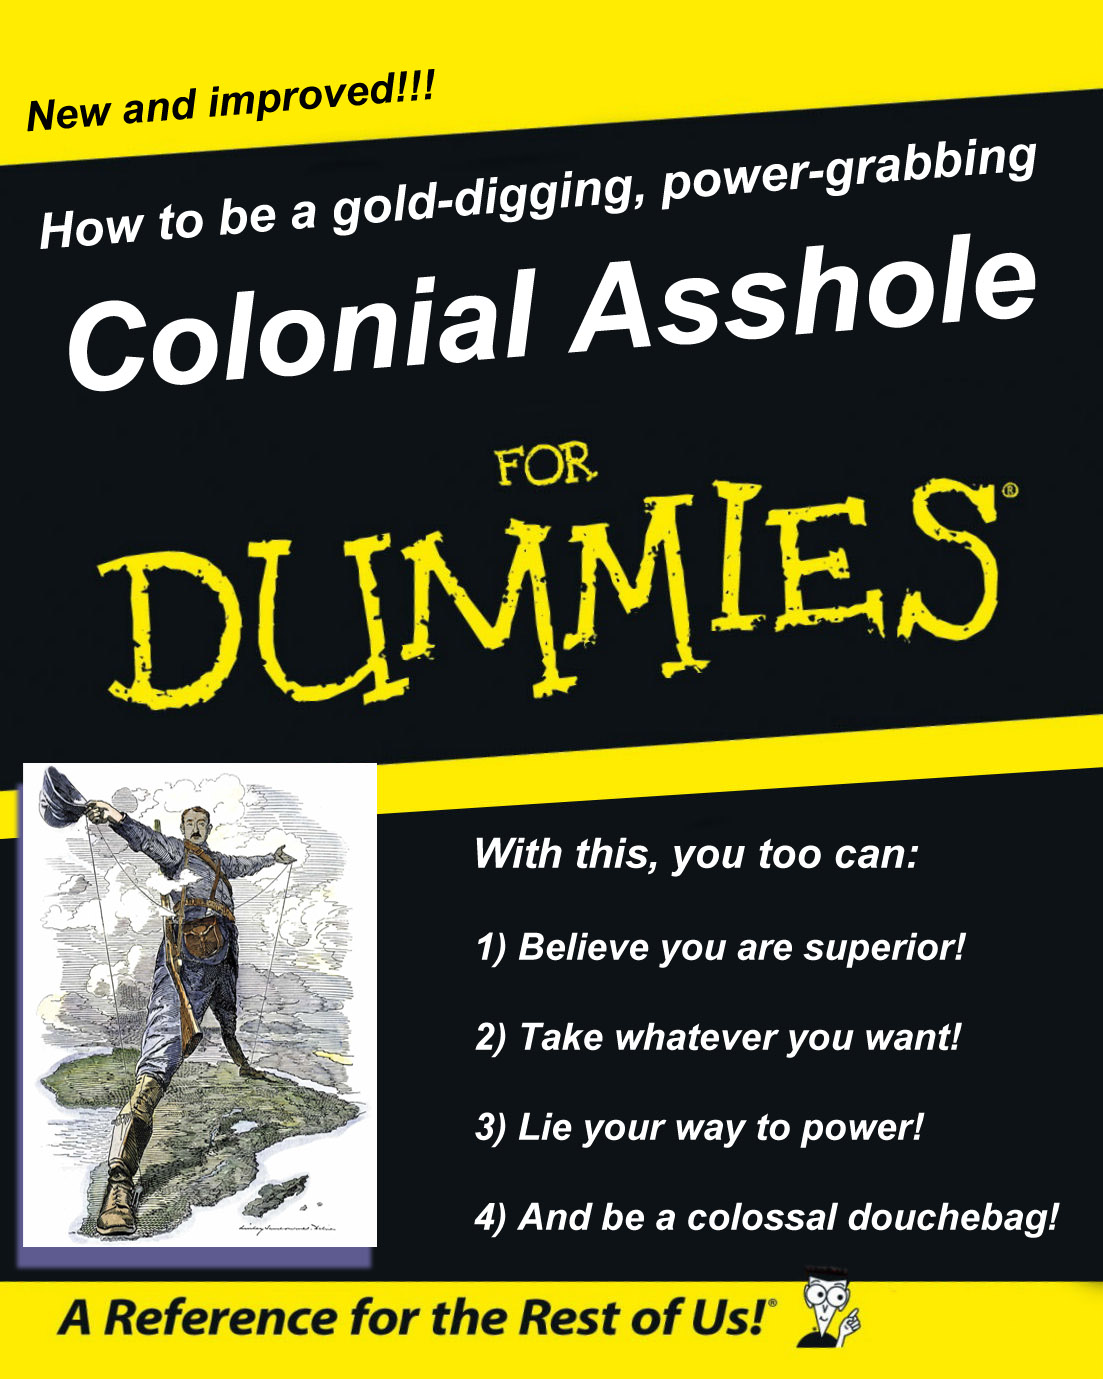 for dummies colonial doucebag copy.jpg